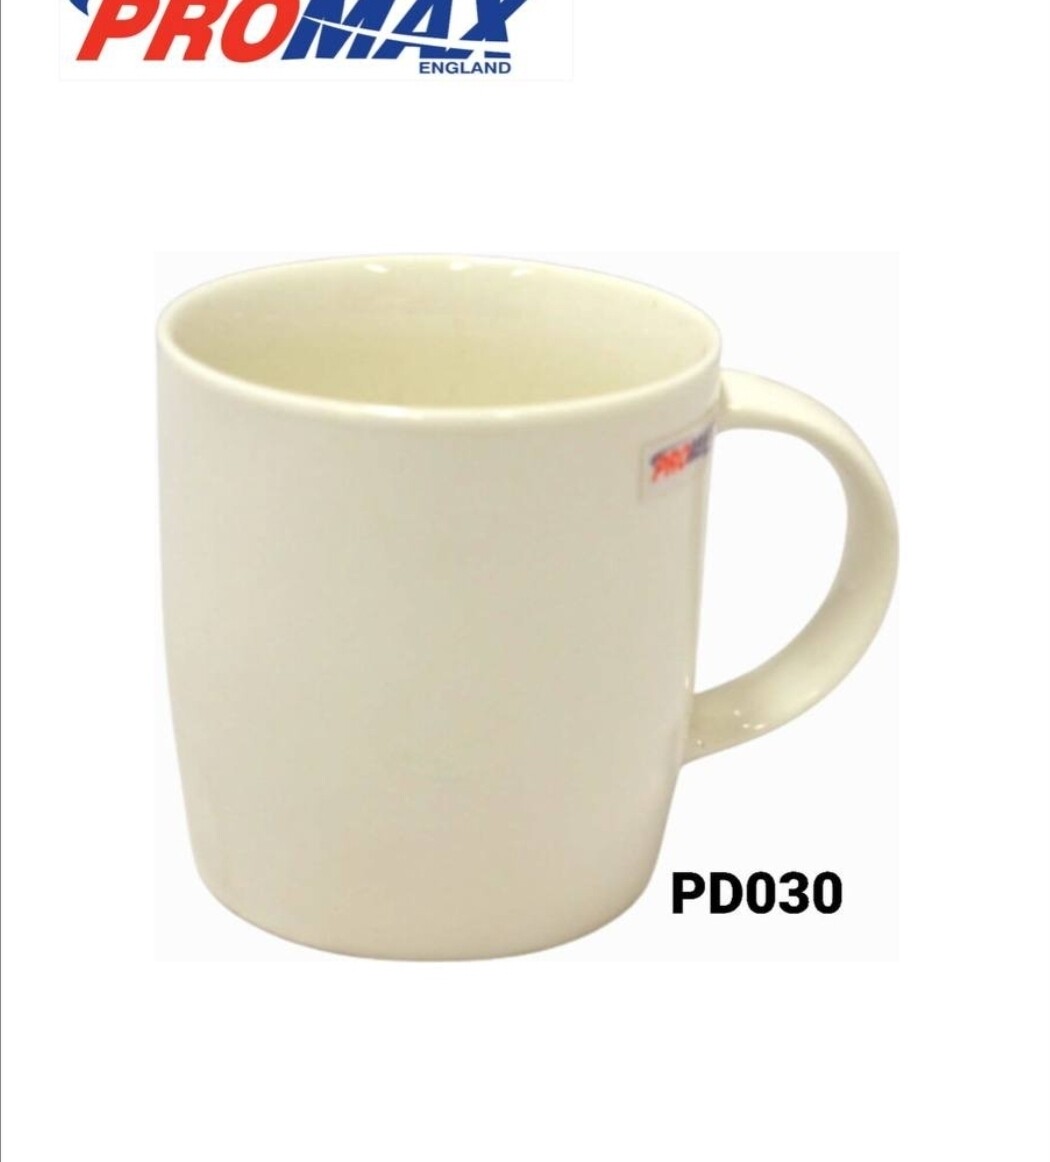 Promax ceramic white mug PD030